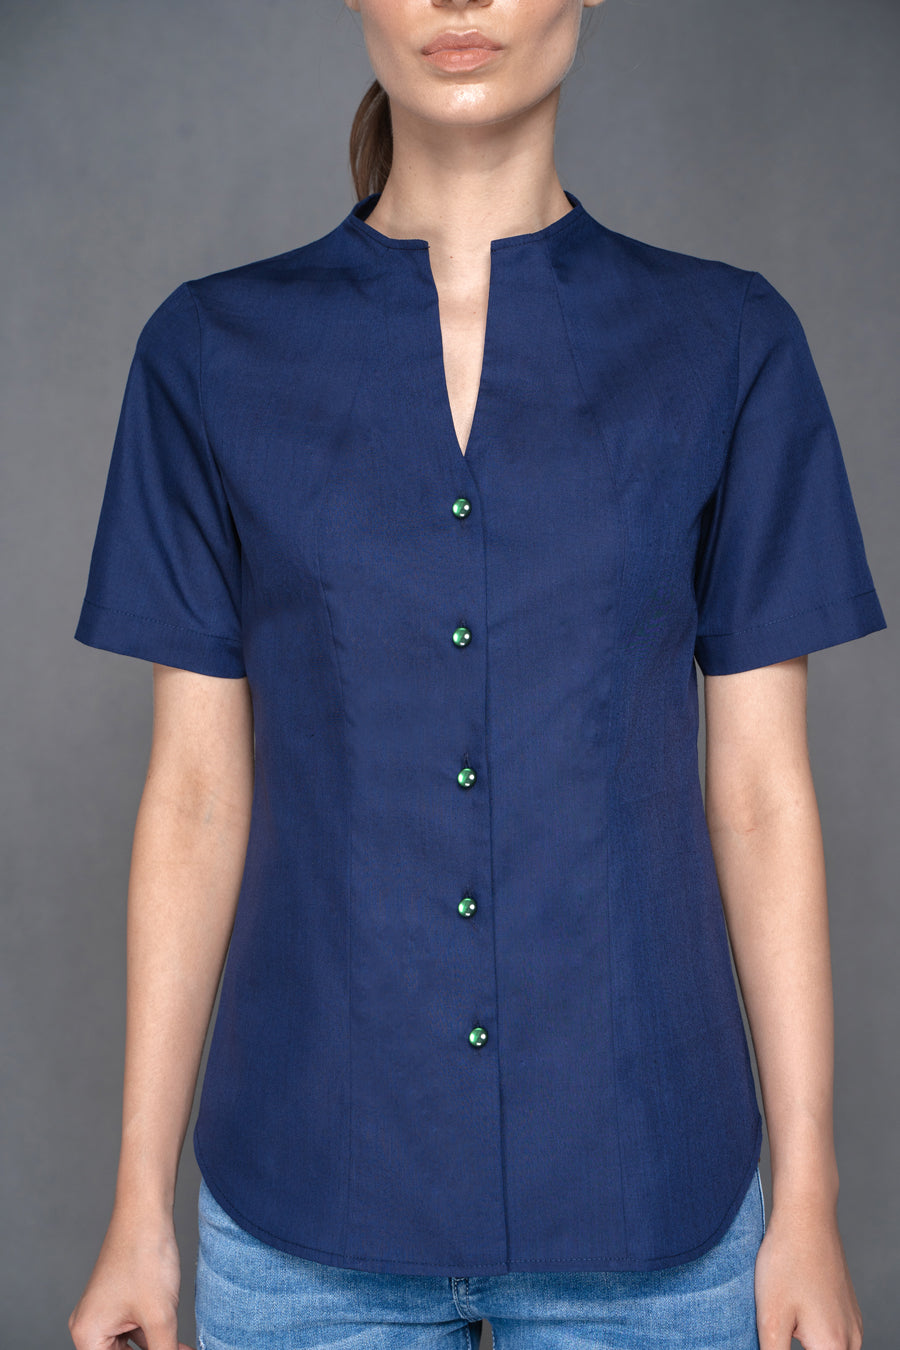 Gabriella - Non Iron - Navy Blue short sleeve shirt